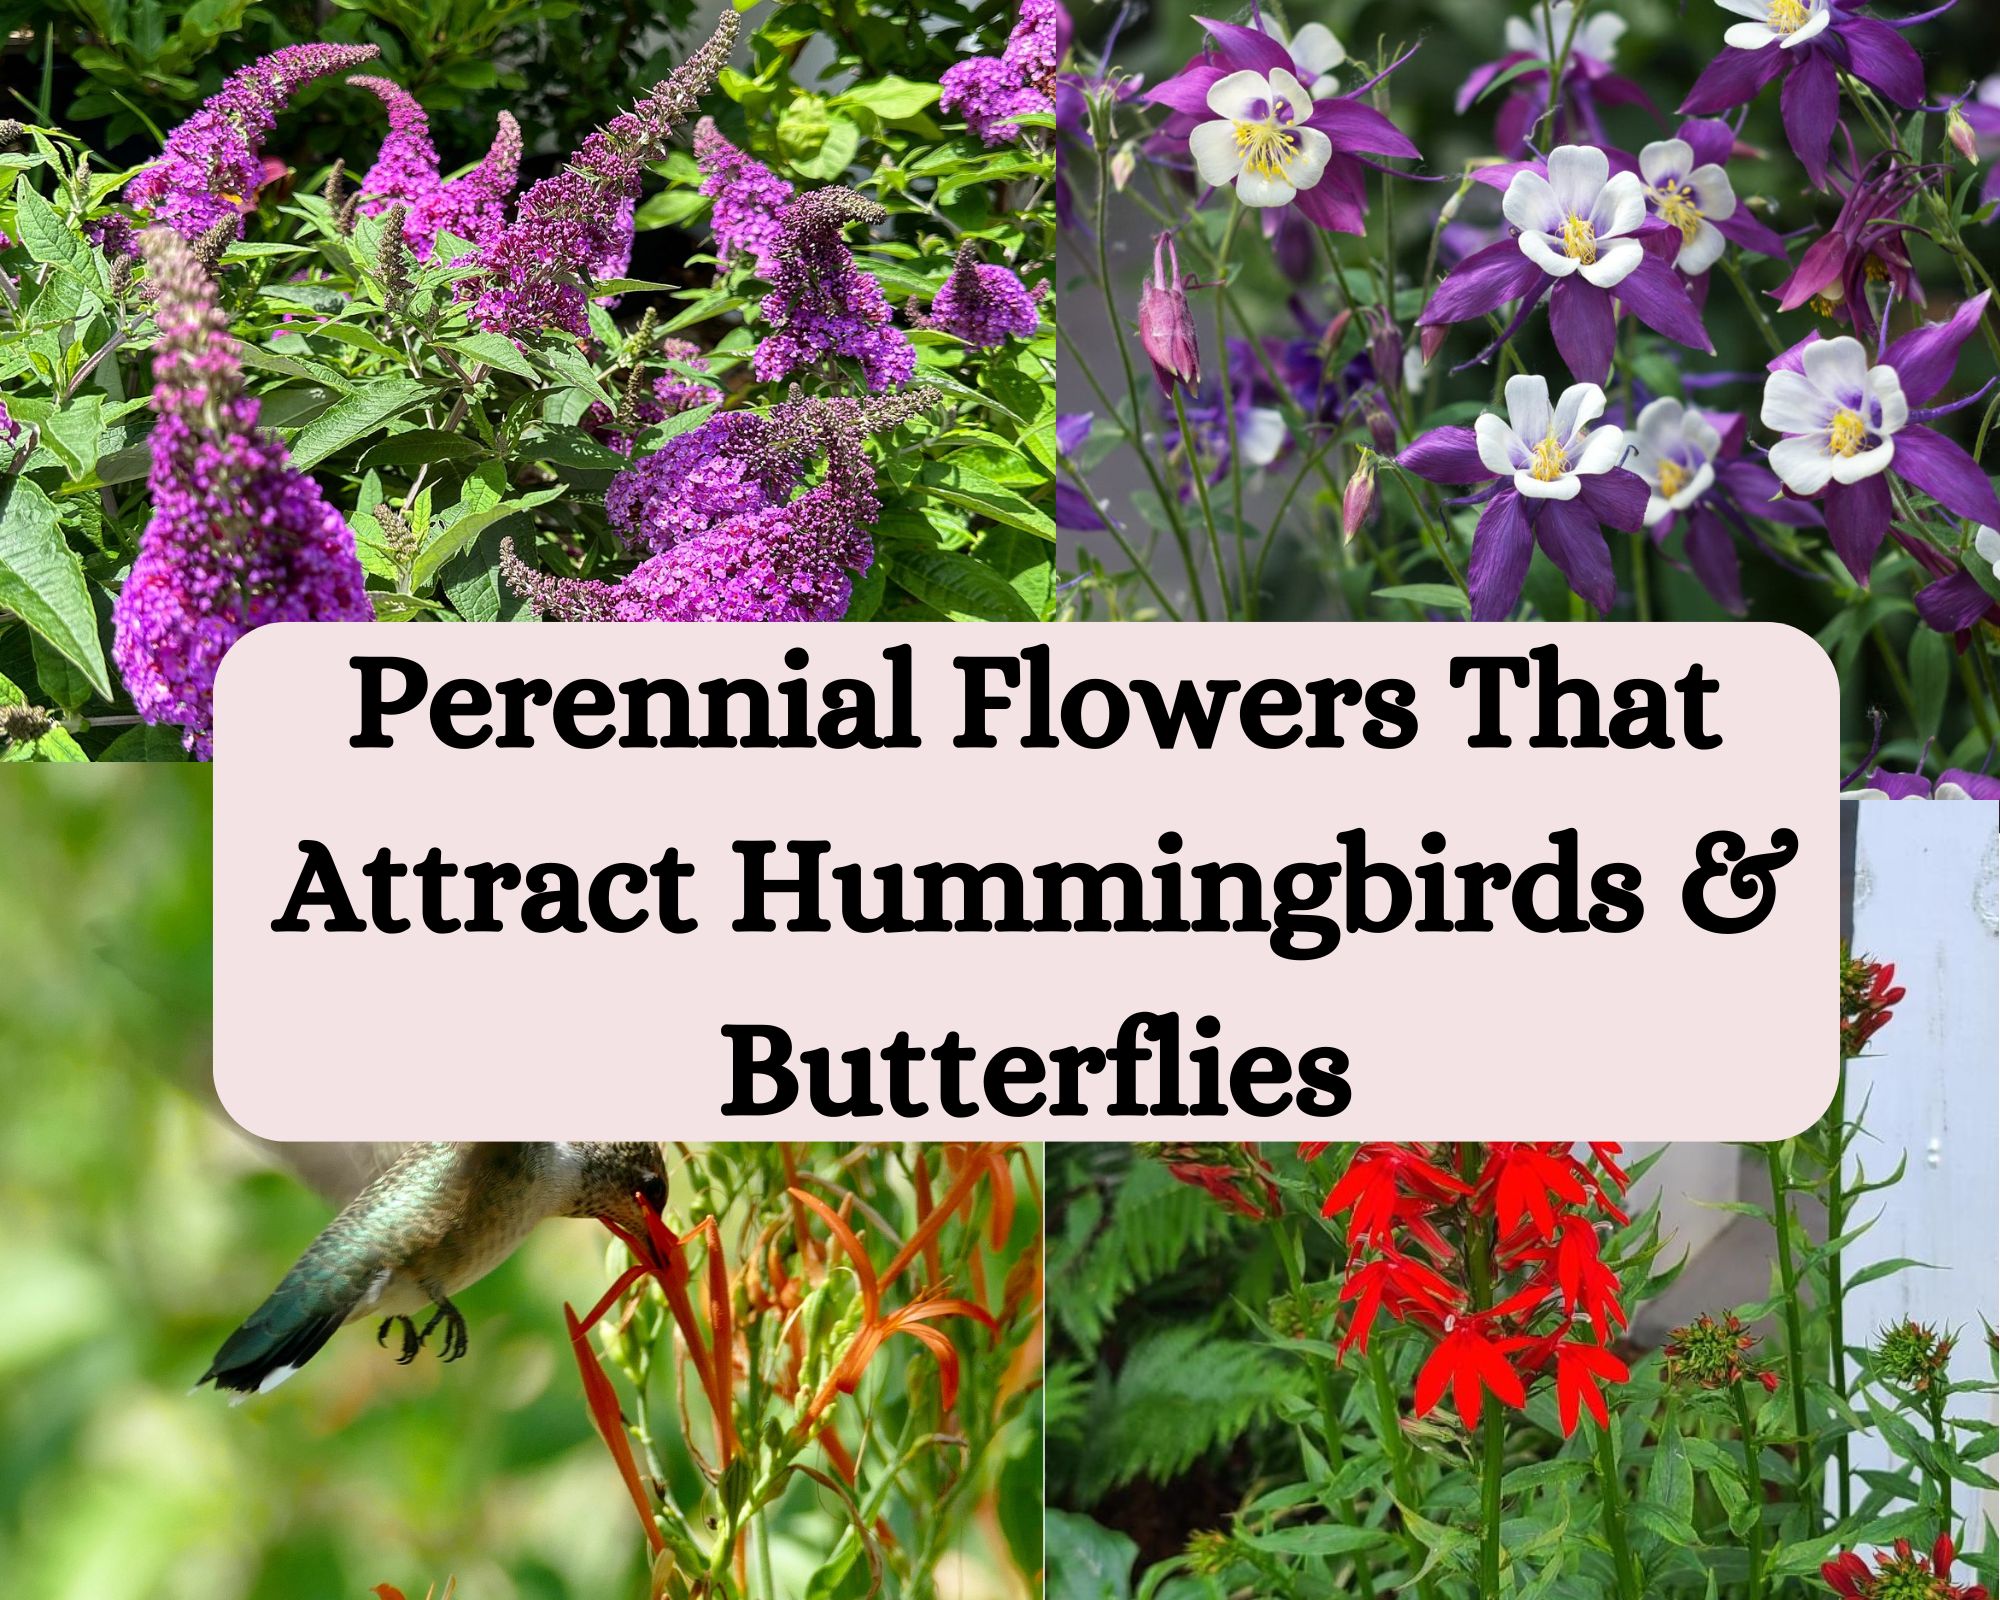 20 Perennial Flowers That Attract Hummingbirds and Butterflies